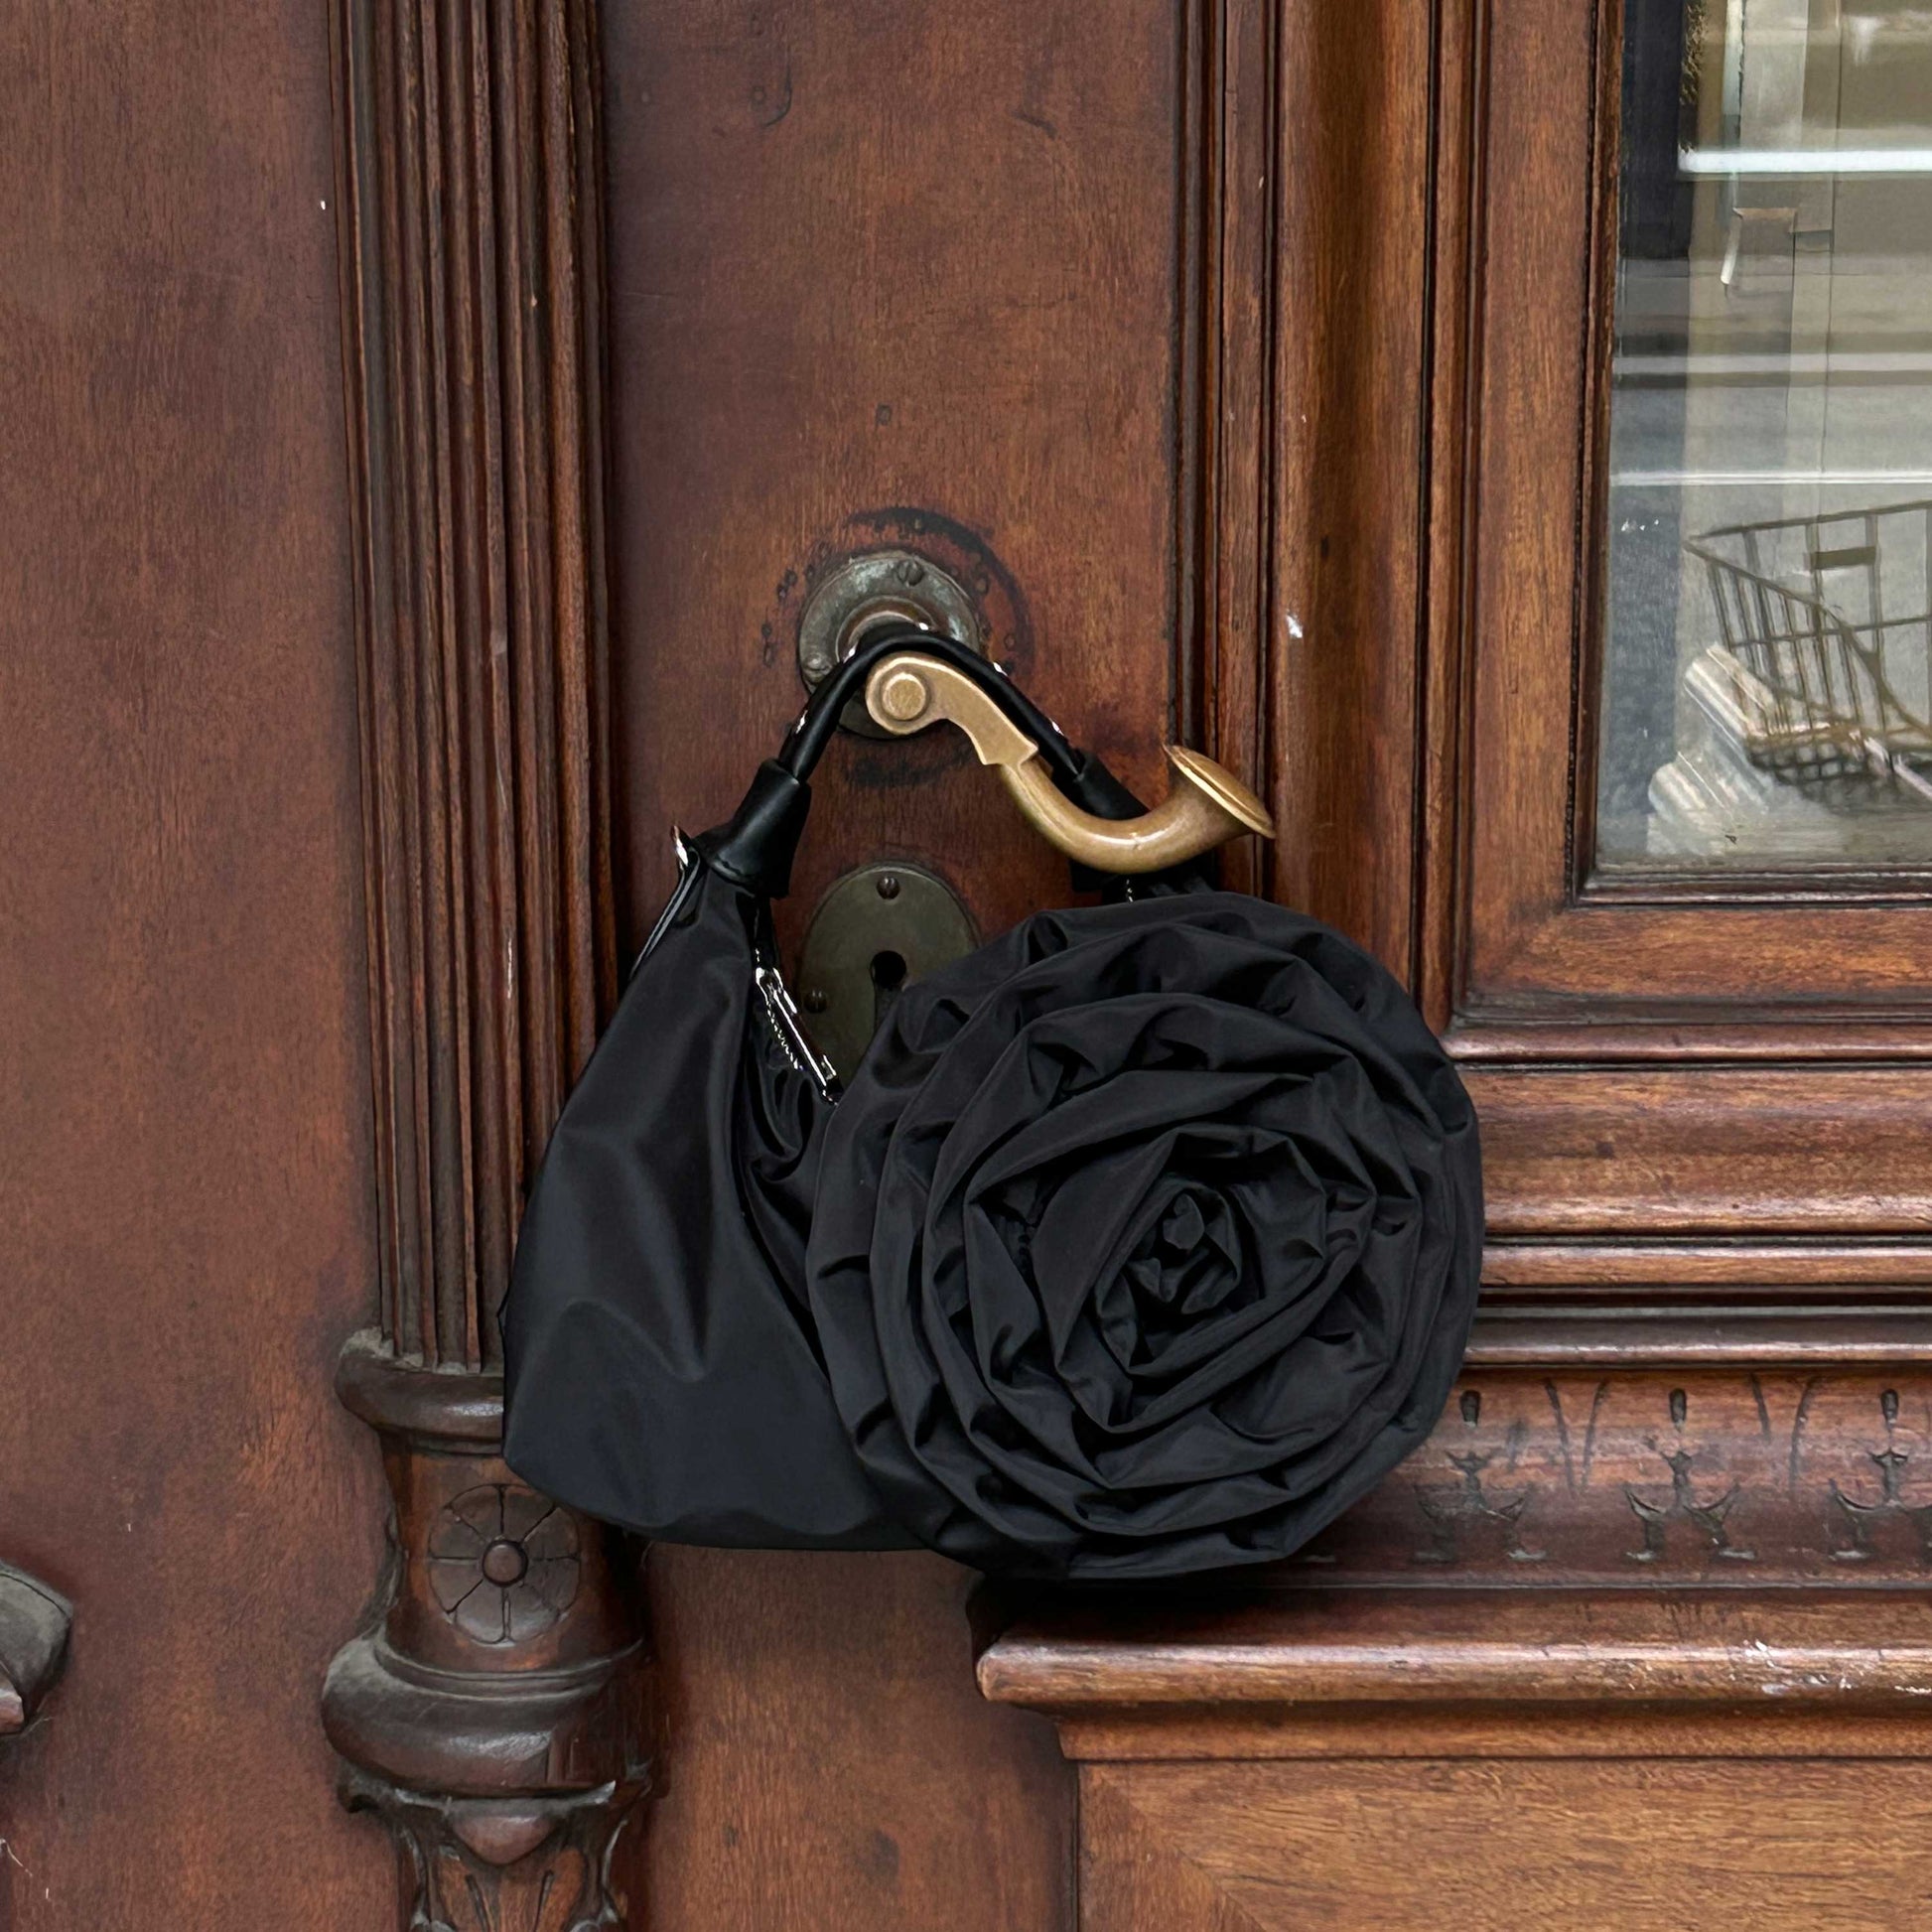 Núnoo Dandy Rose Recycled Nylon Black Shoulder bags Black